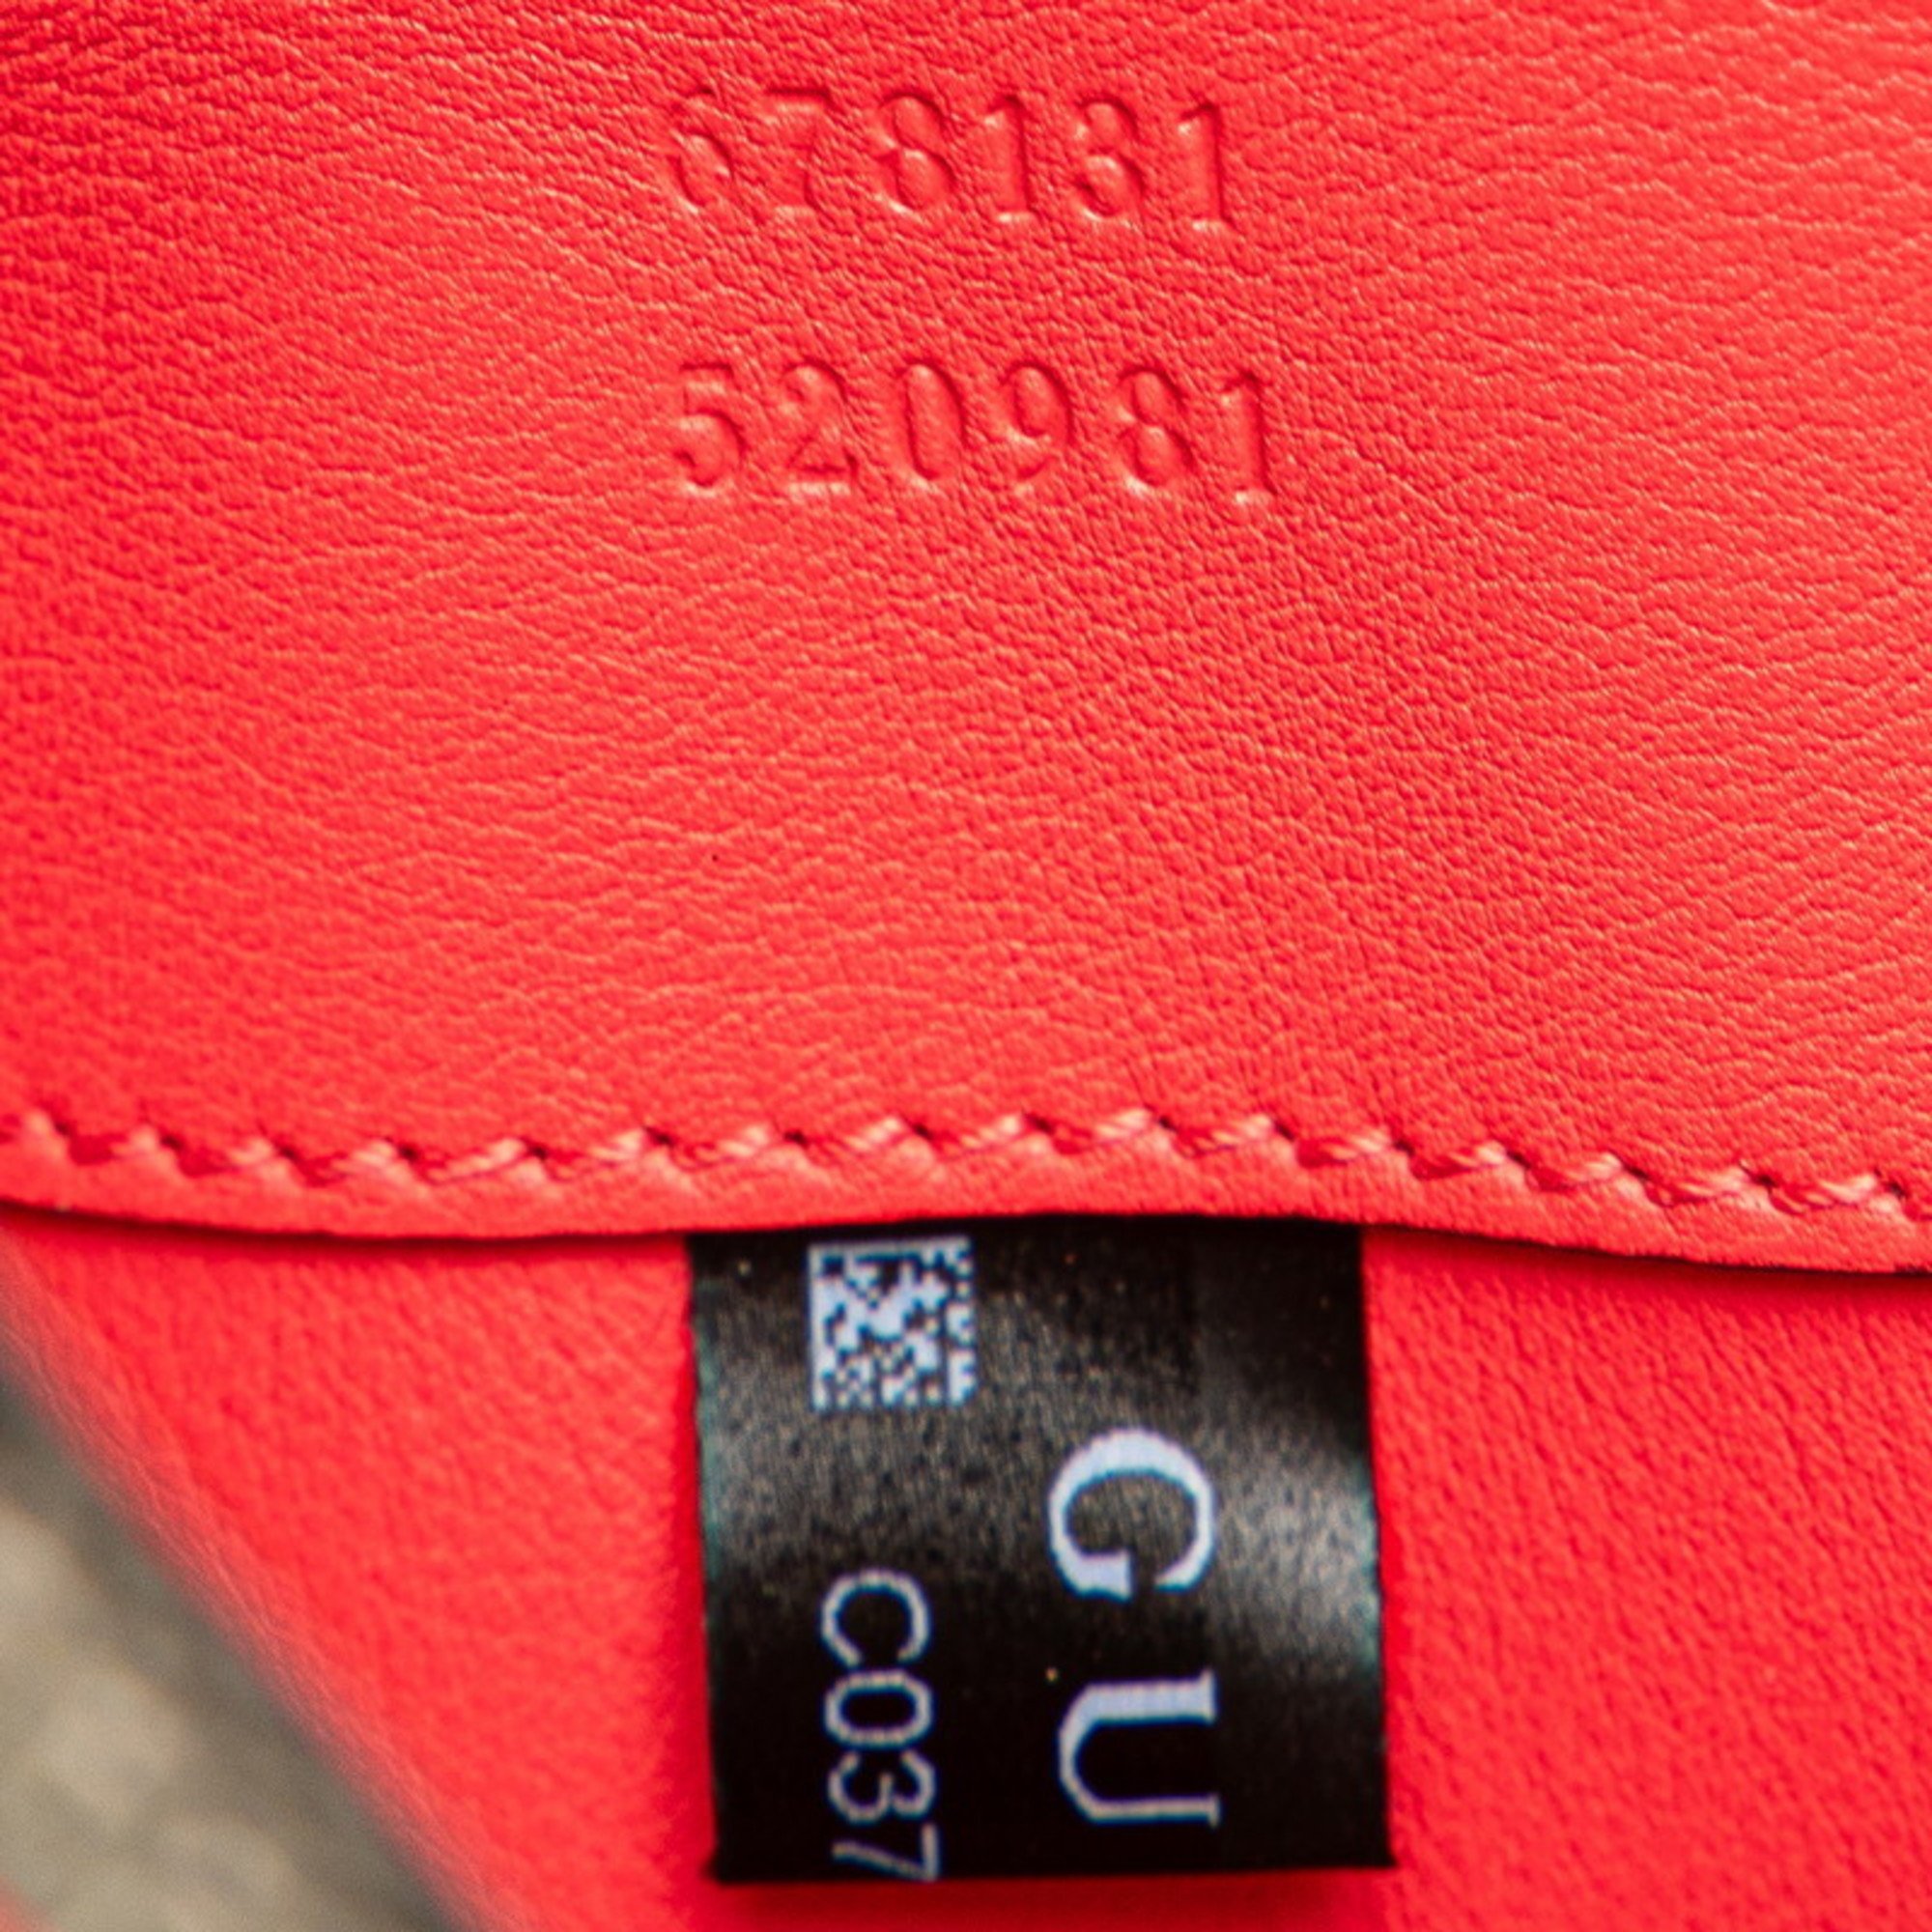 Gucci GG Supreme Small Heart LOVE Chain Shoulder Bag 678131 Beige Red PVC Leather Women's GUCCI